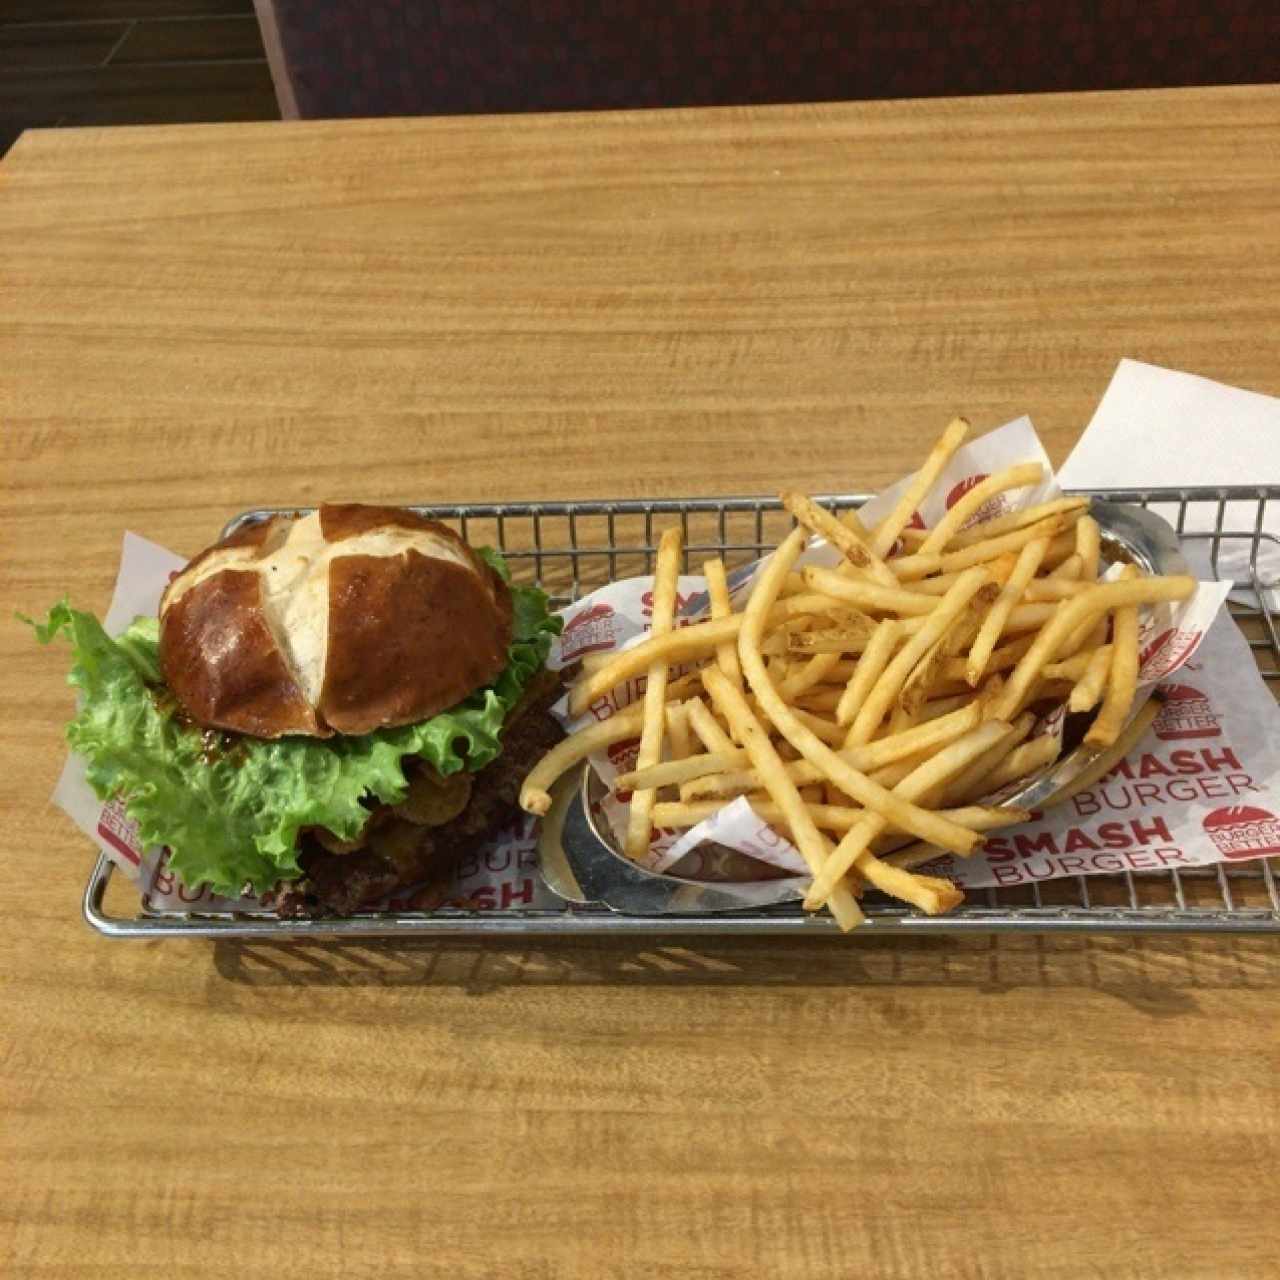 Chicago burger + papas fritas 